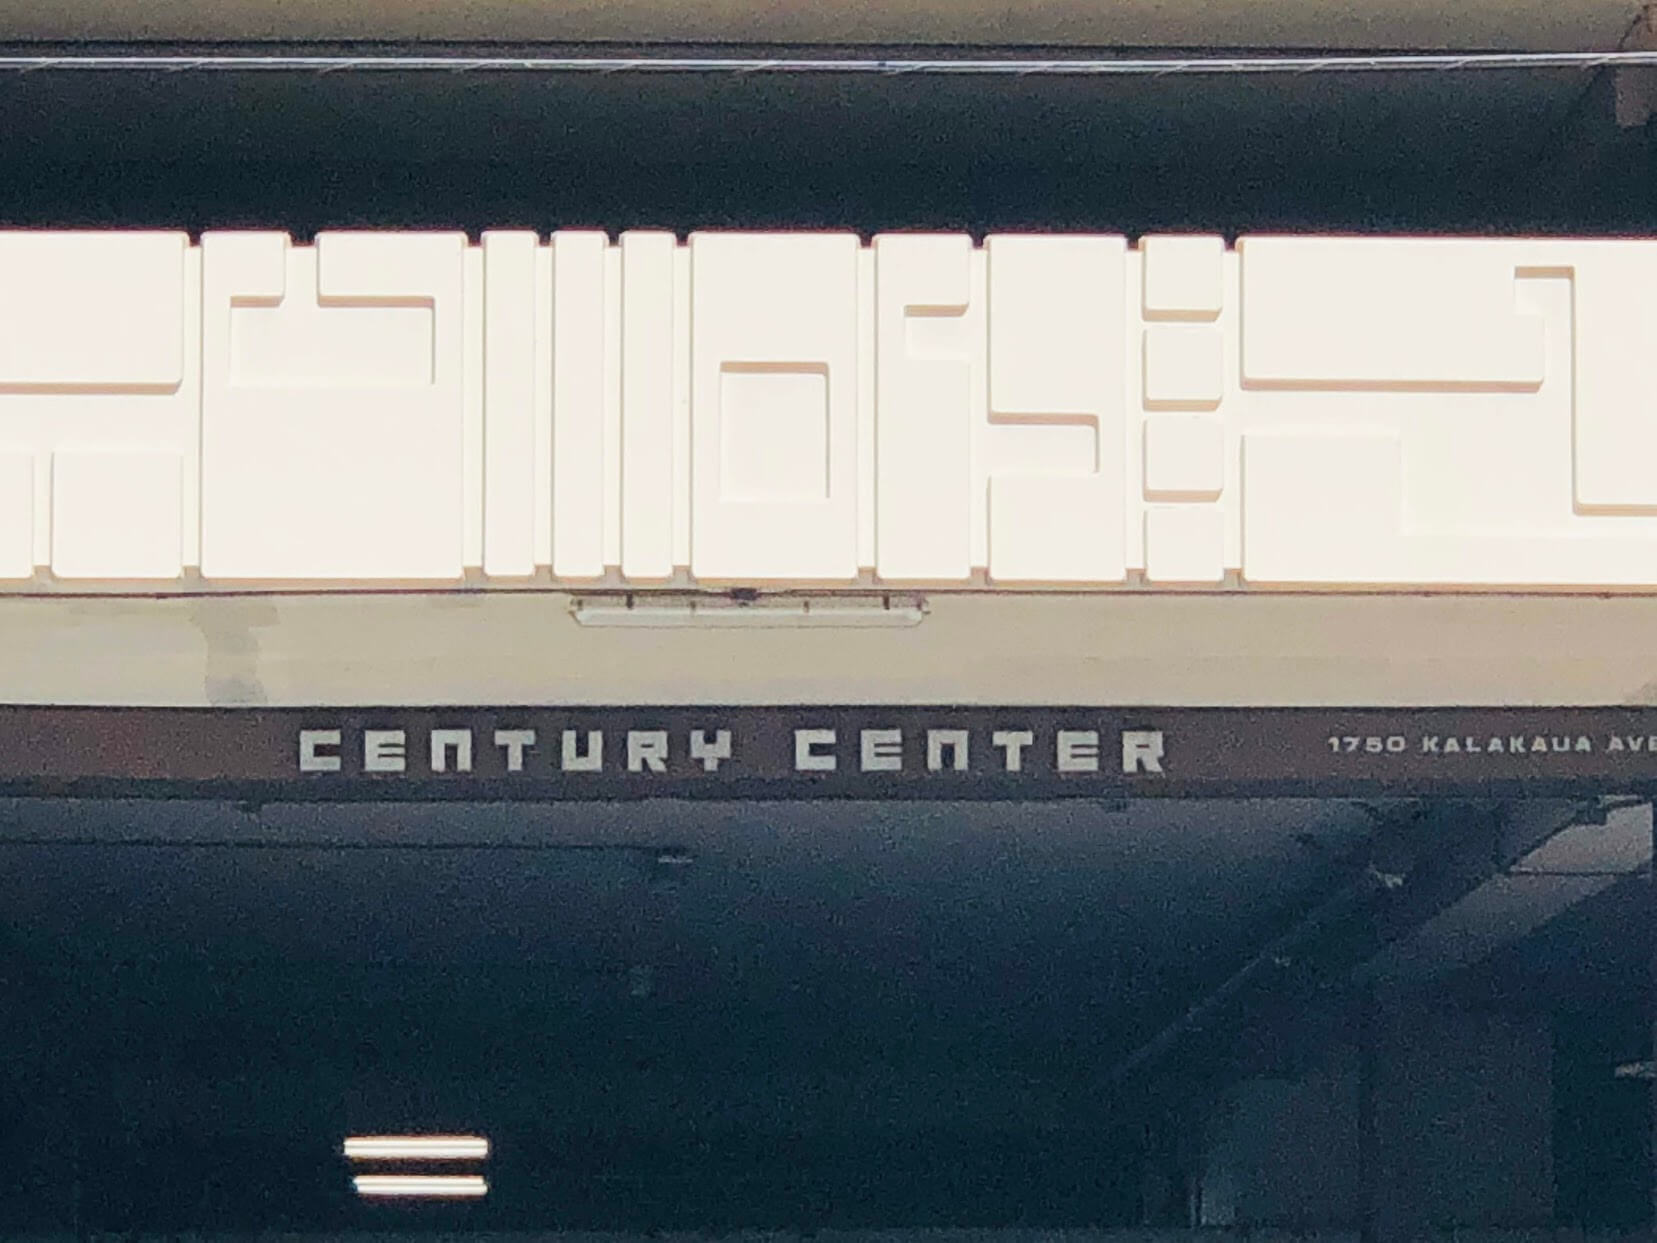 Century Centerの看板